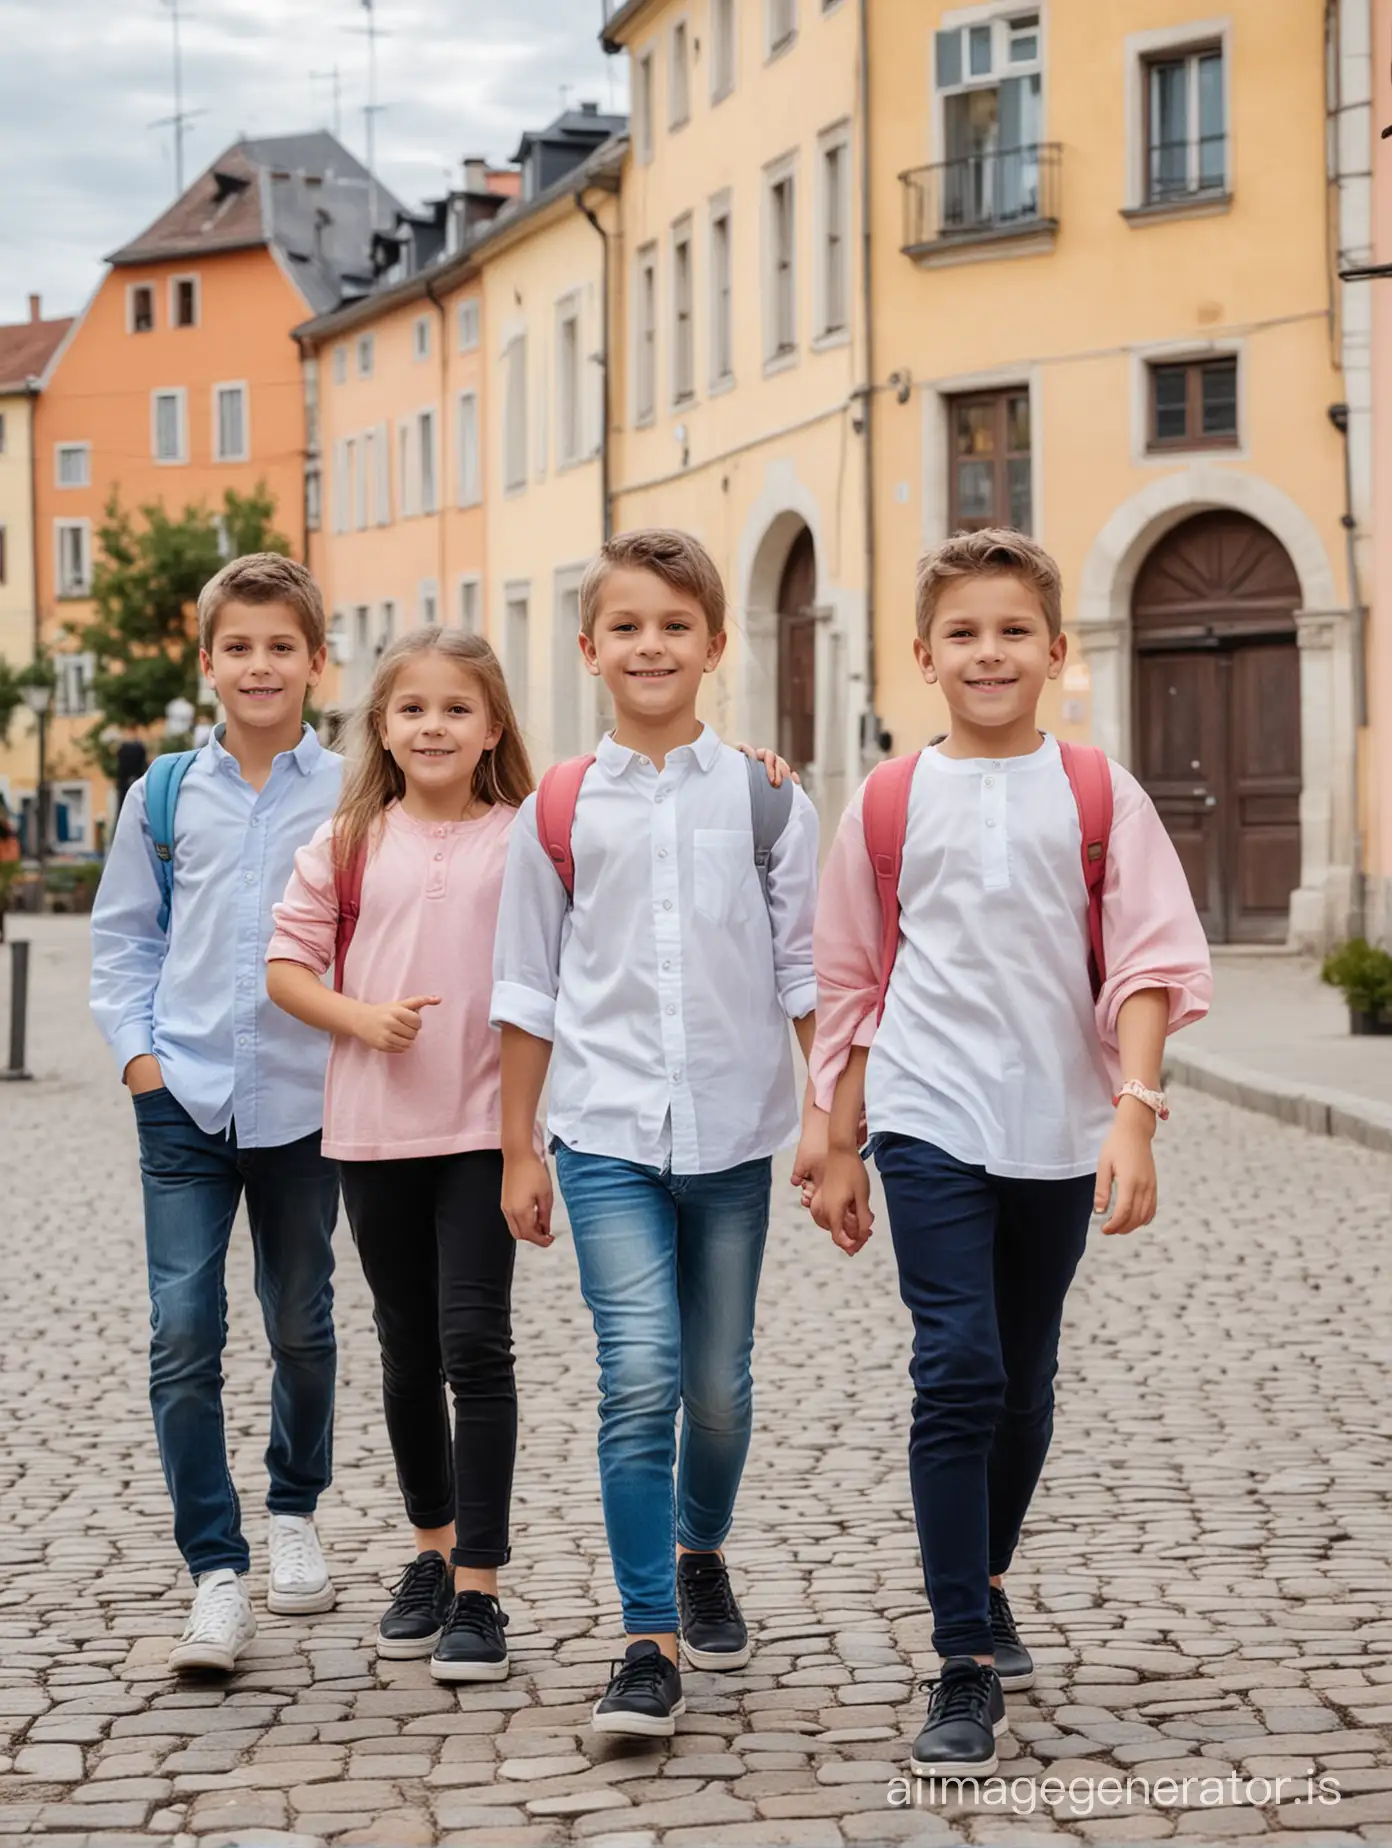 Four European Kids, Smart, Active, successful future